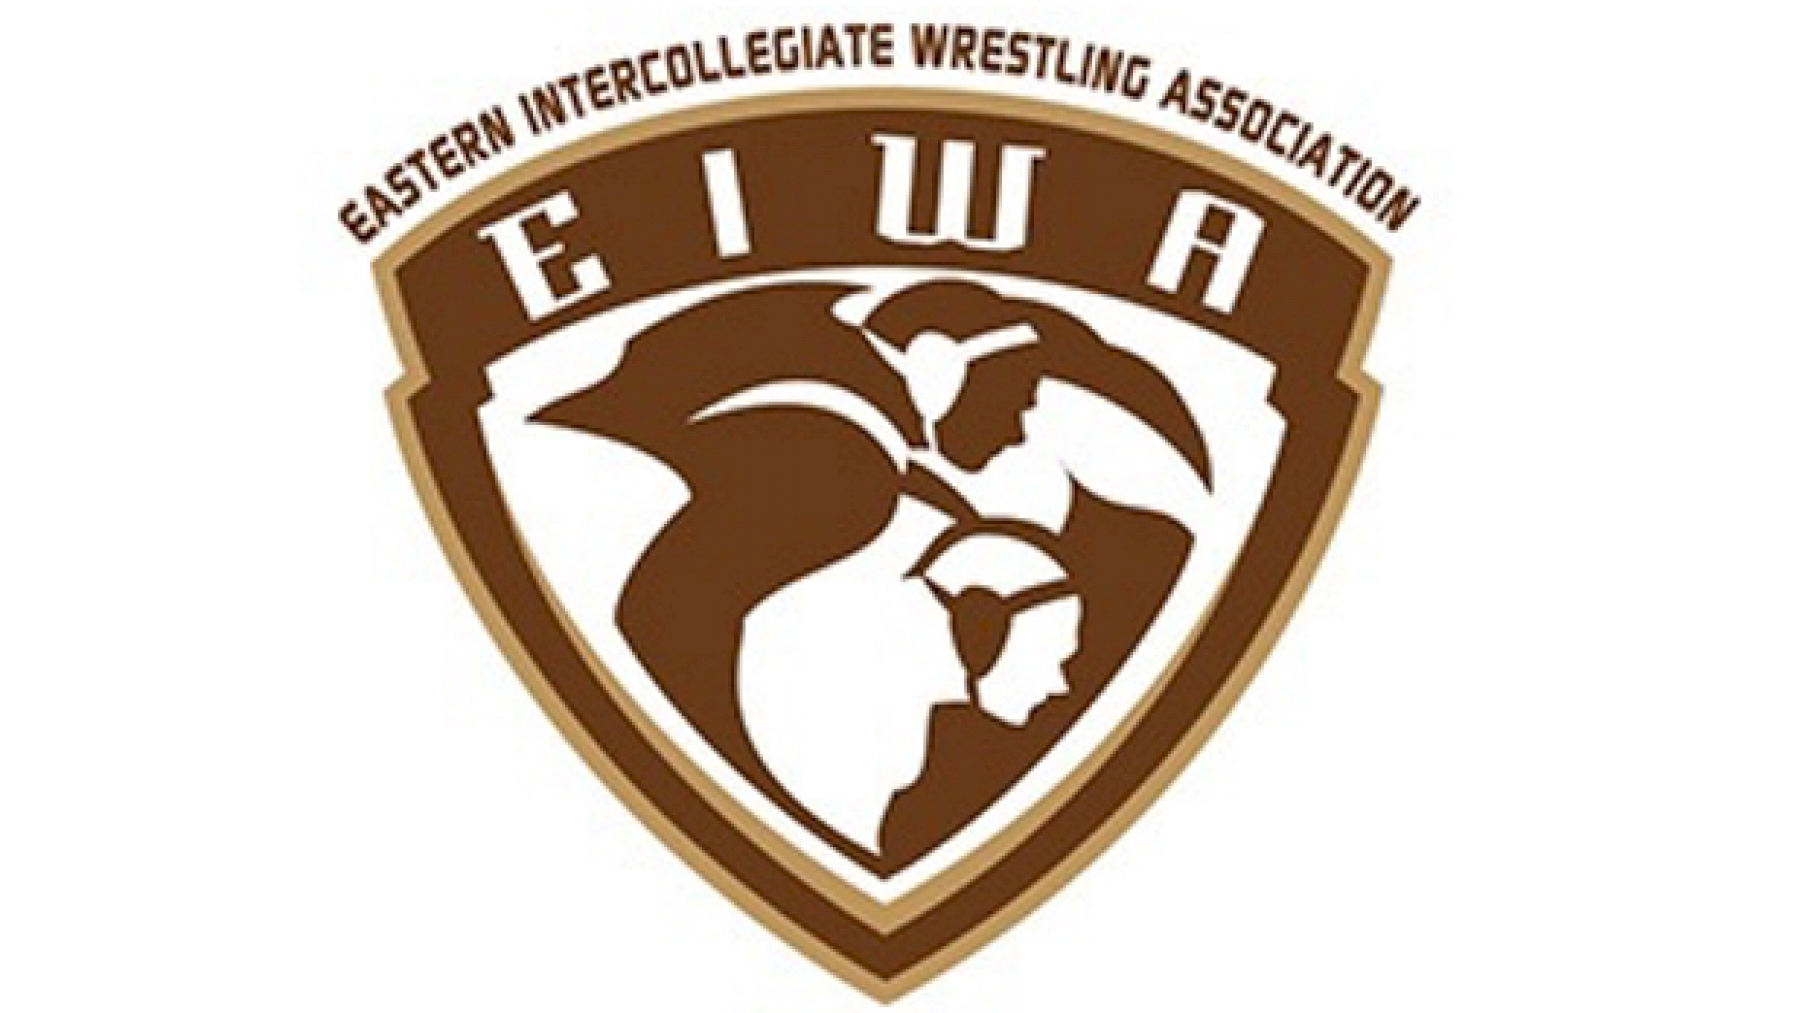 2020 EIWA Championship Wrestling Event FloWrestling